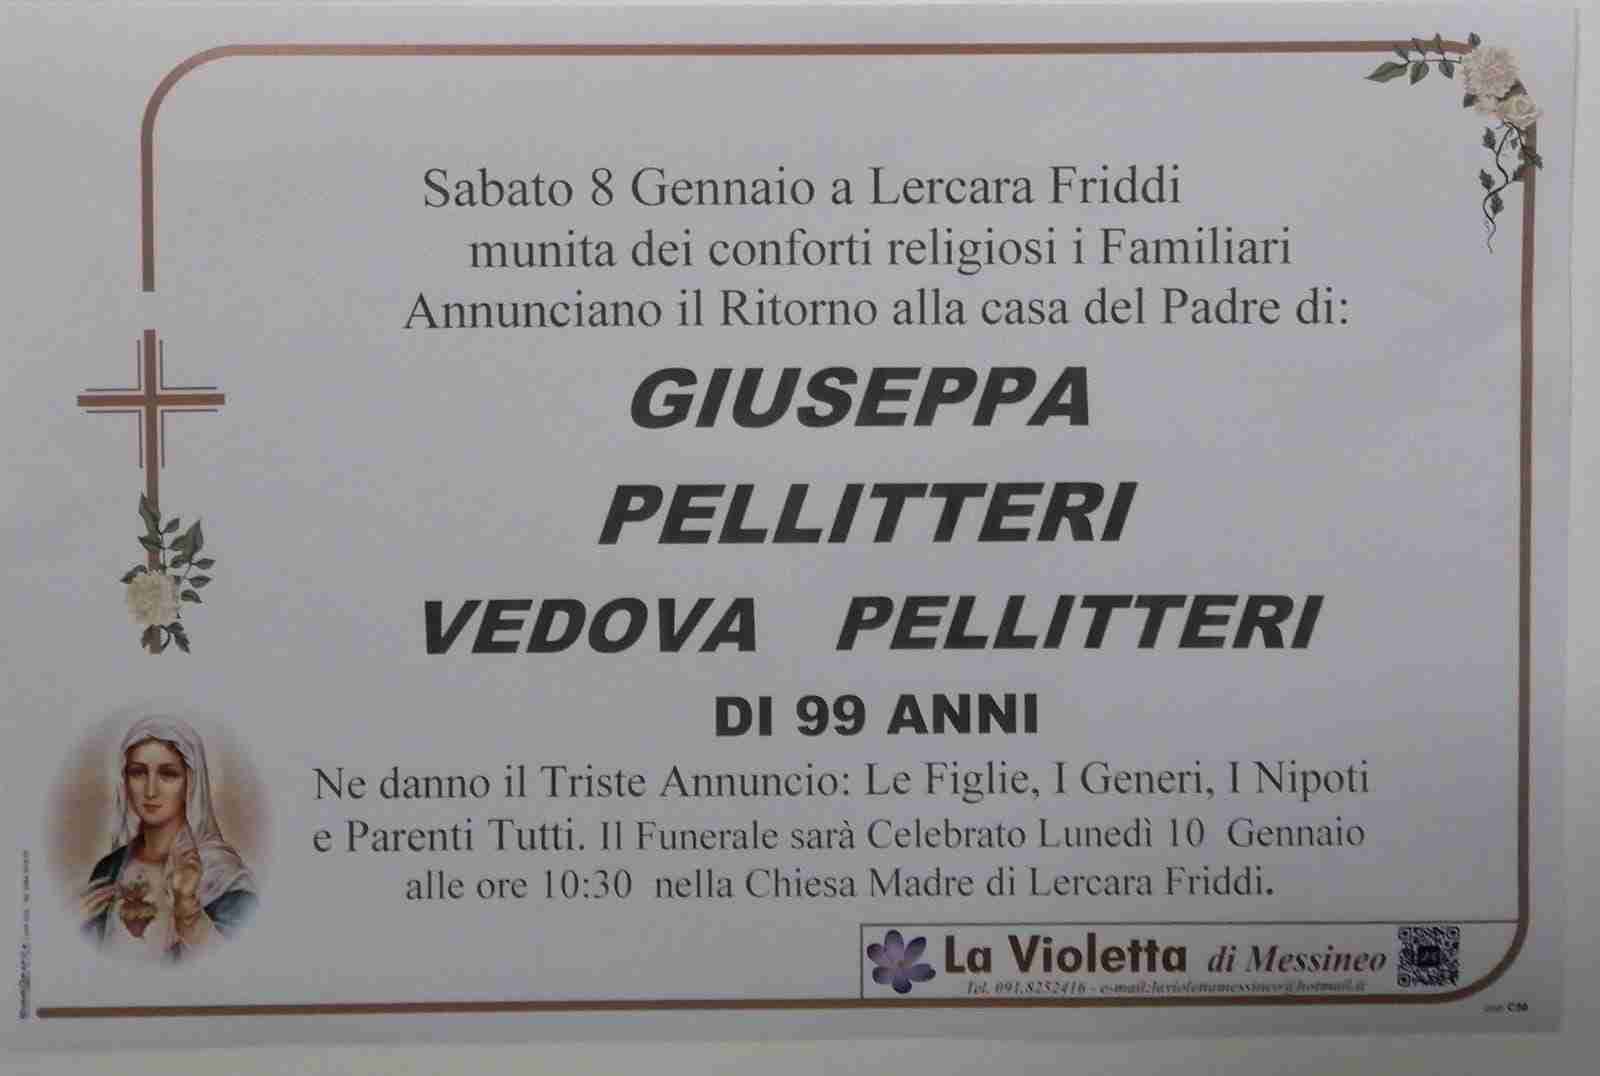 Giuseppa Pellitteri